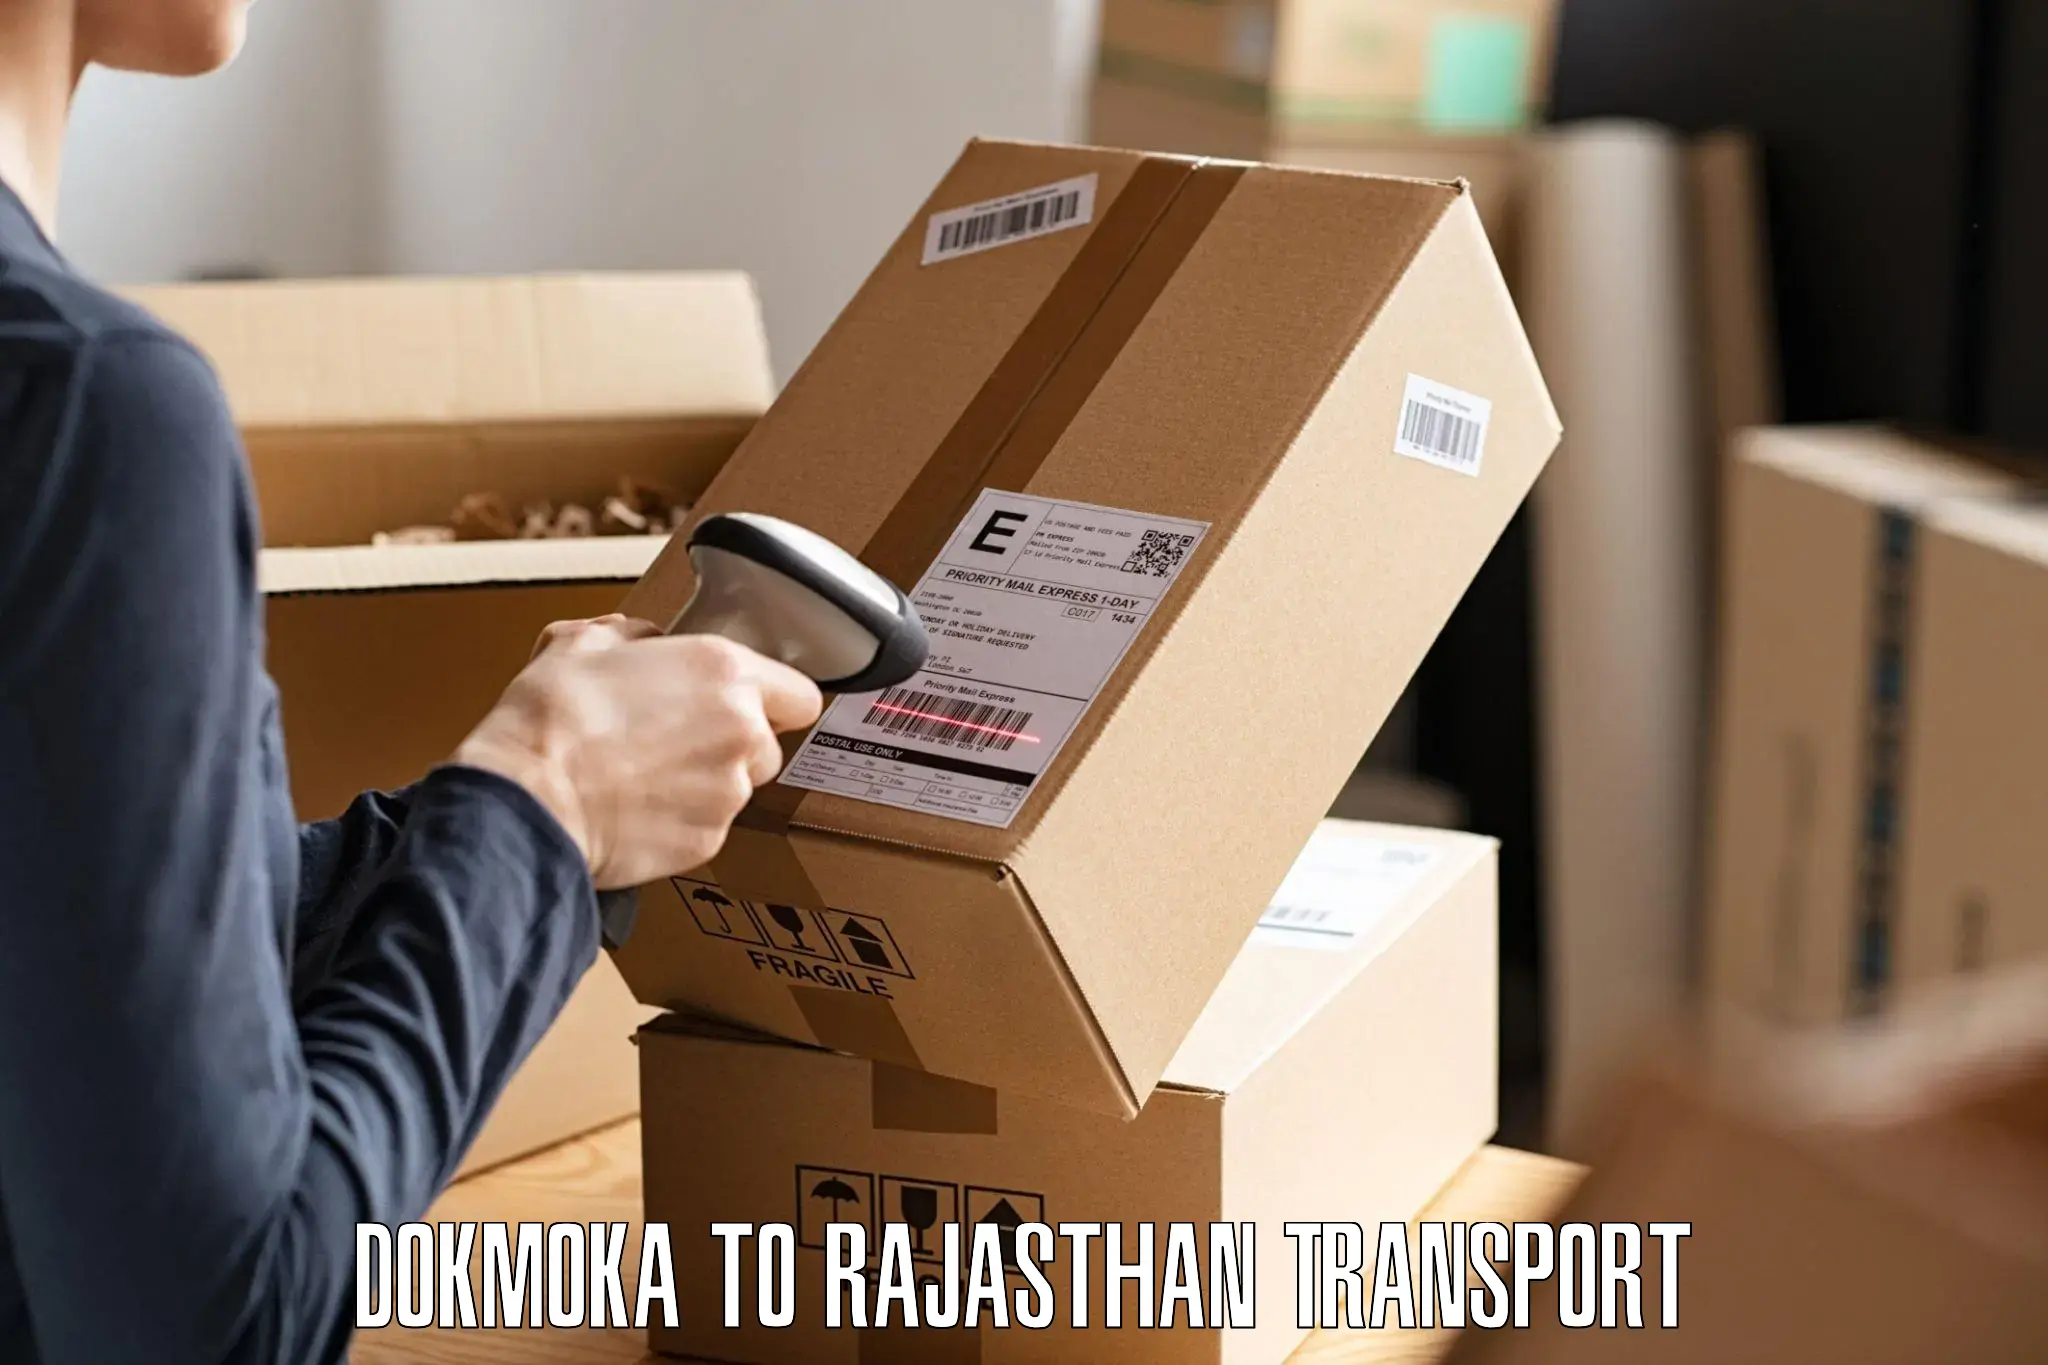 Furniture transport service Dokmoka to Pokhran